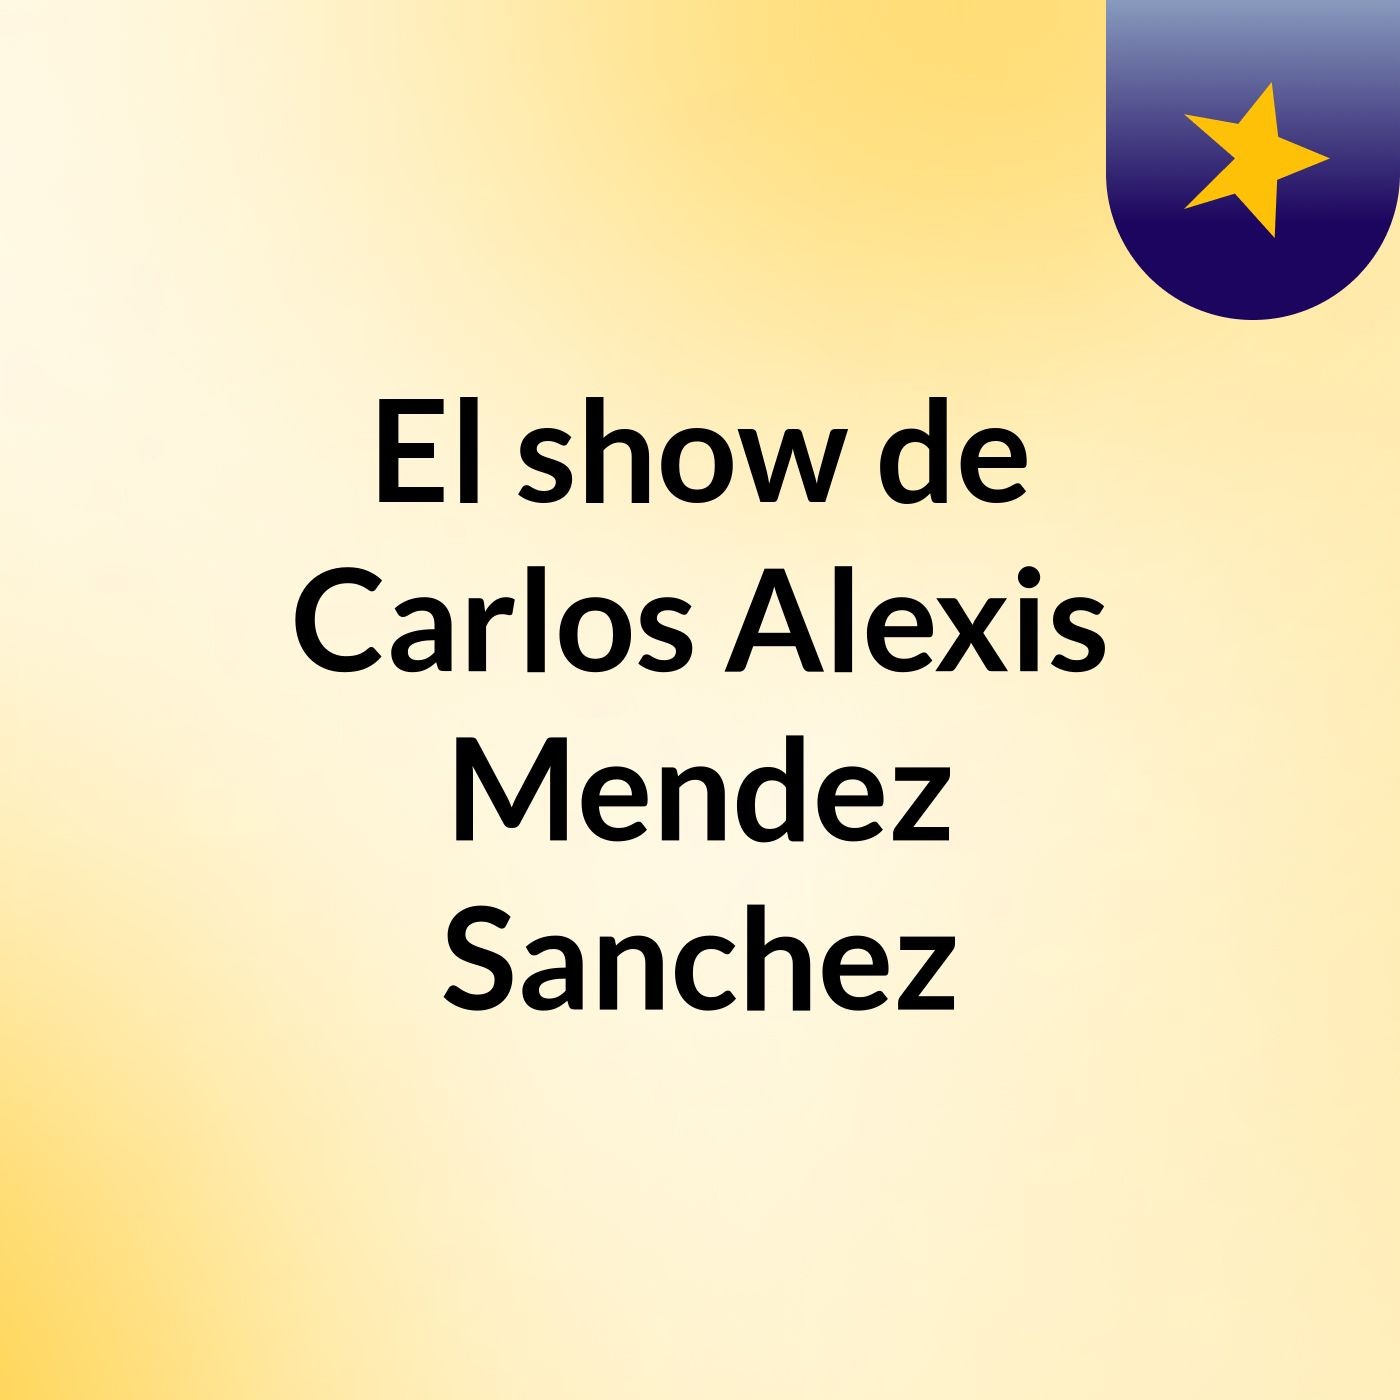 El show de Carlos Alexis Mendez Sanchez